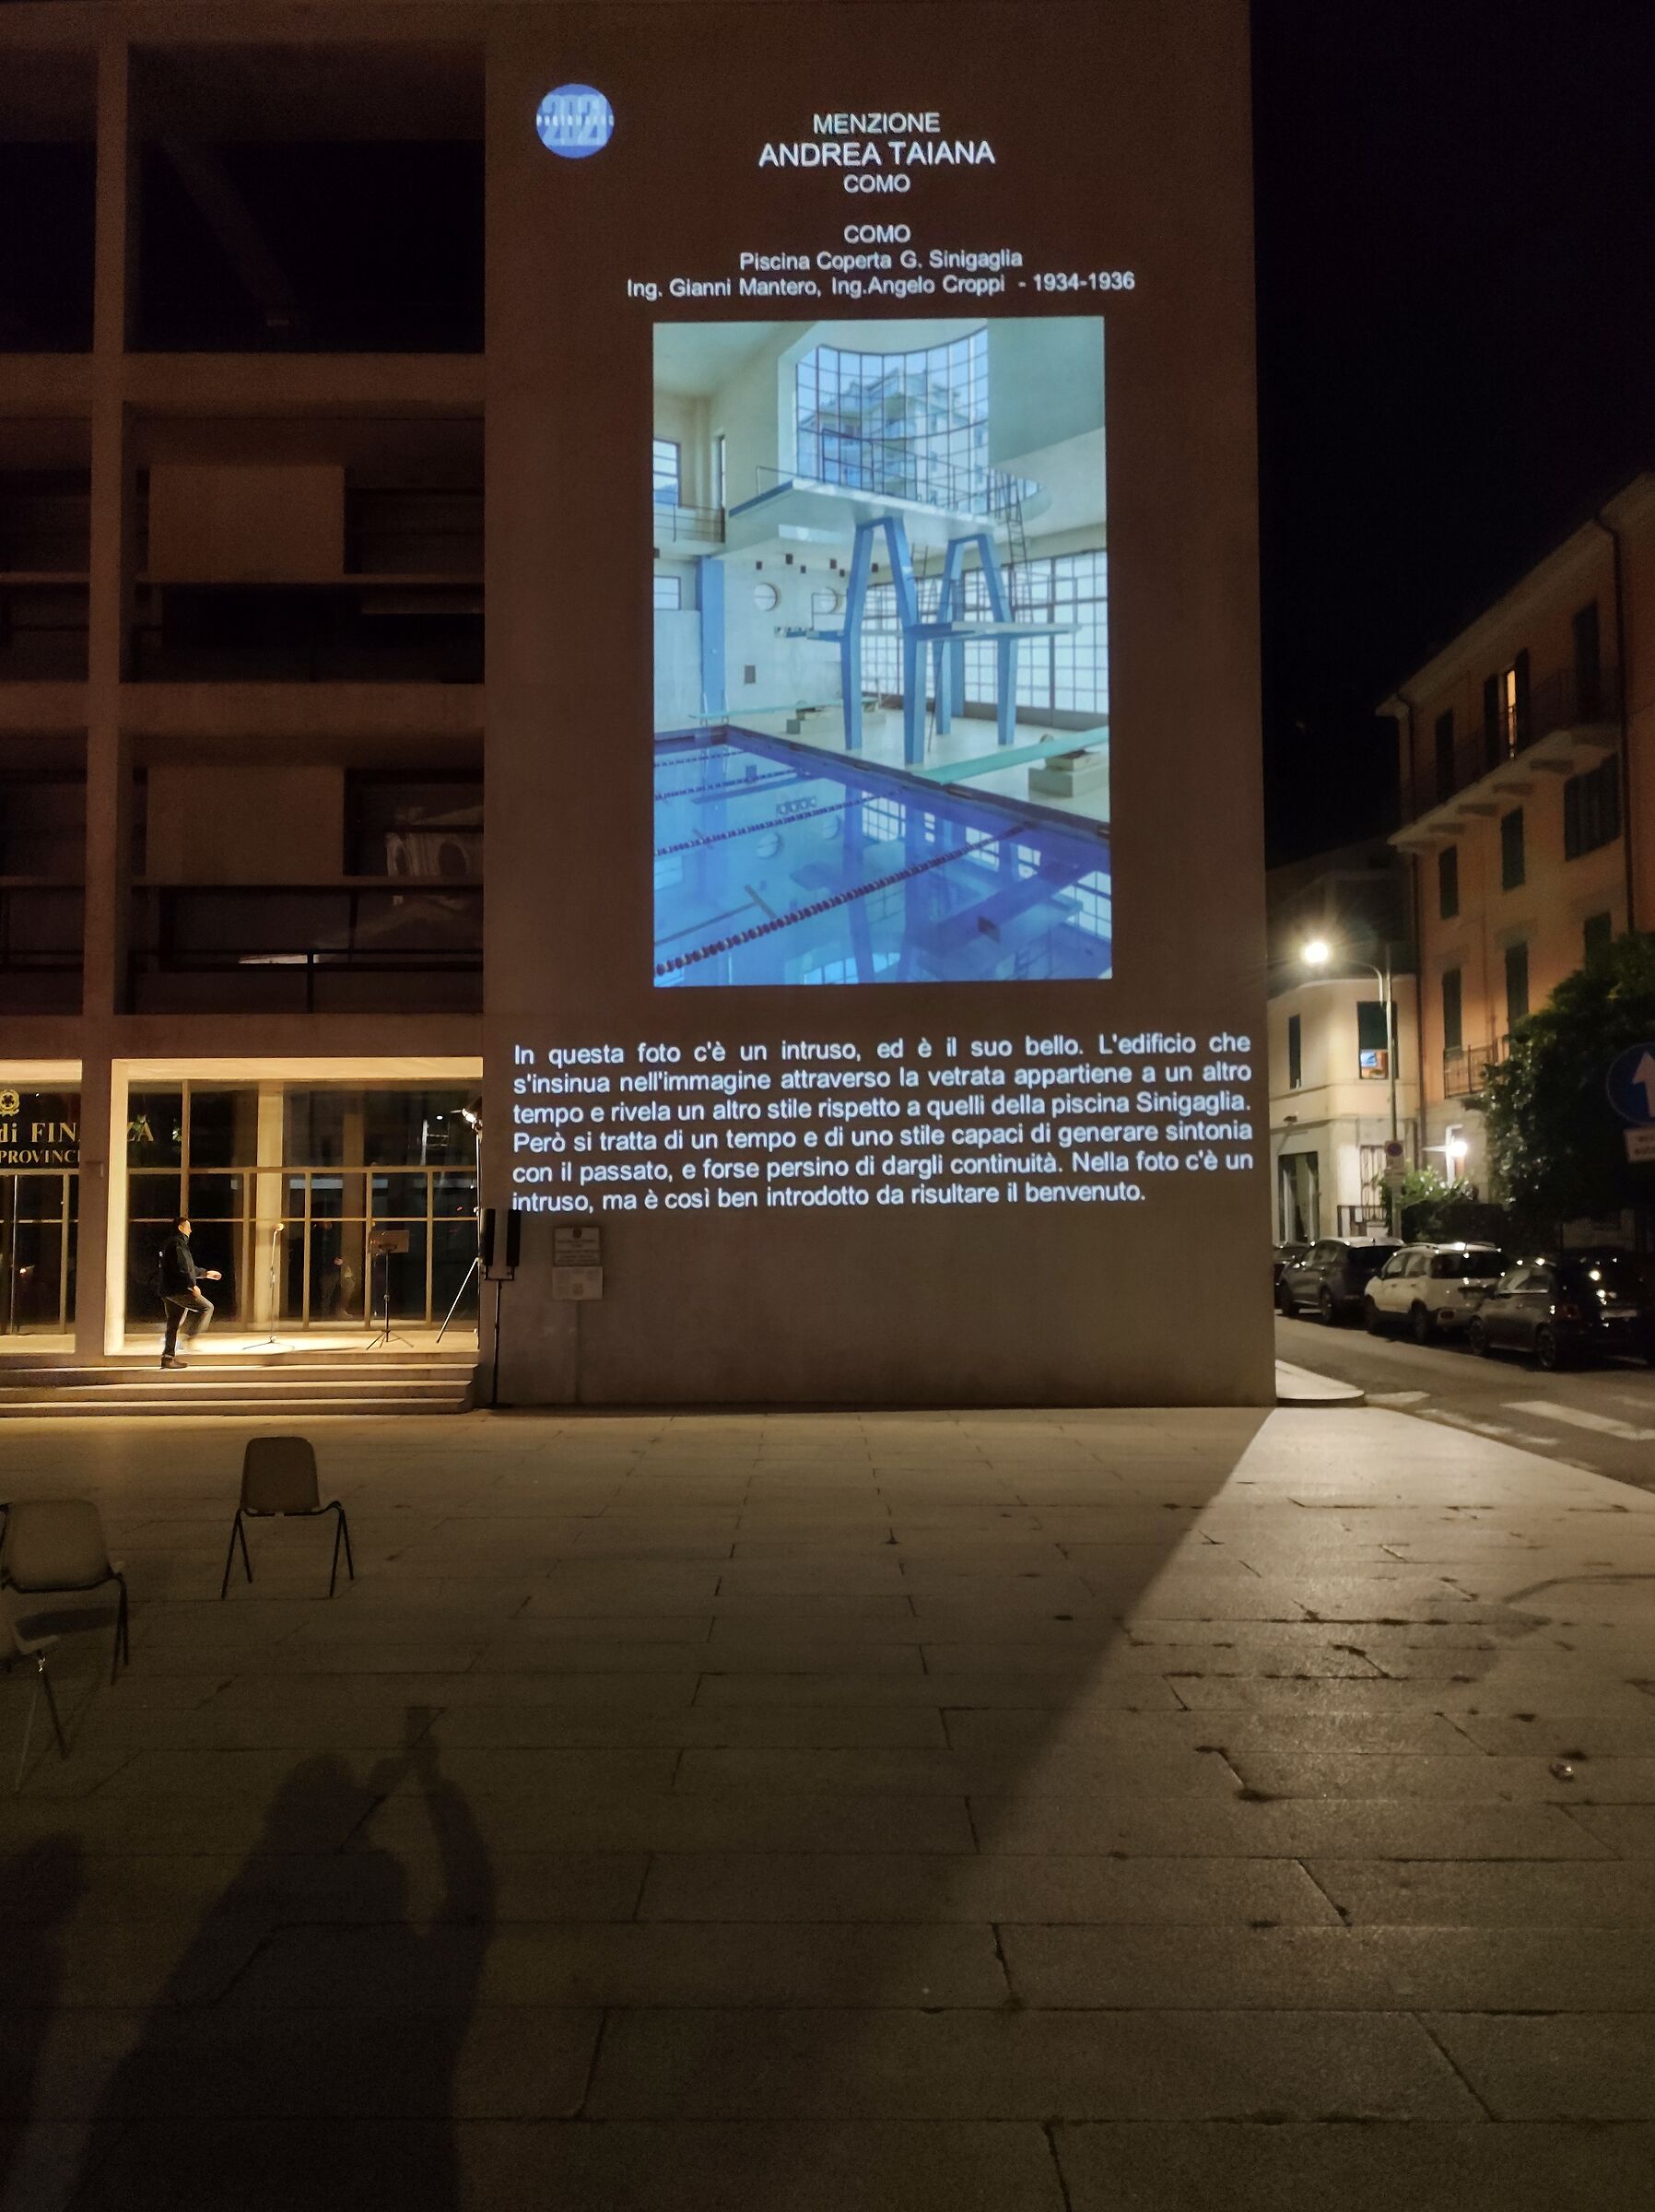 Swimming pool G.Sinigaglia mention PhotoMAARC projection ...